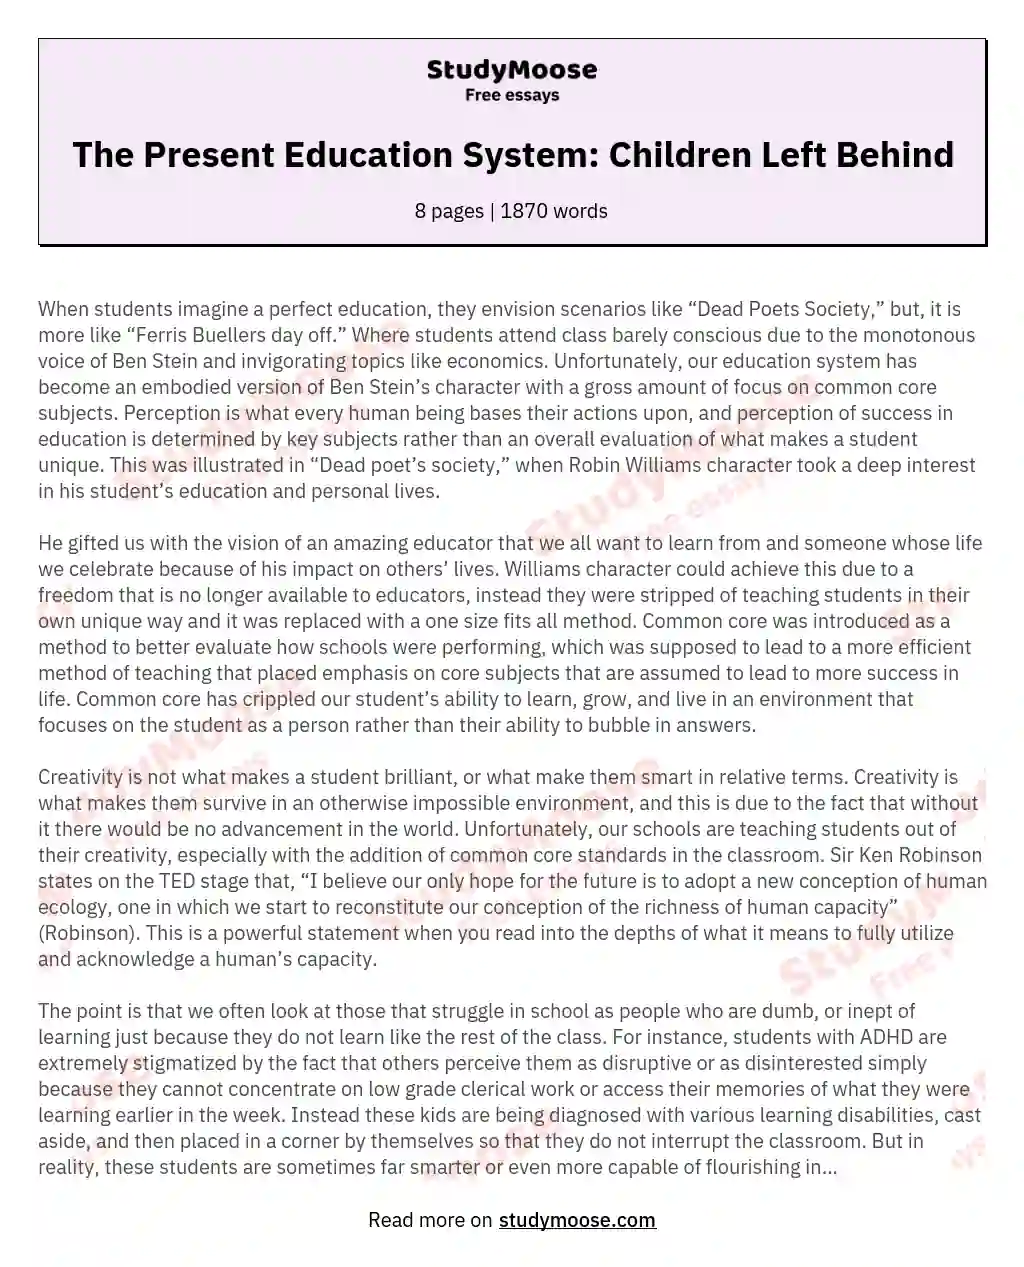 The Present Education System: Children Left Behind essay